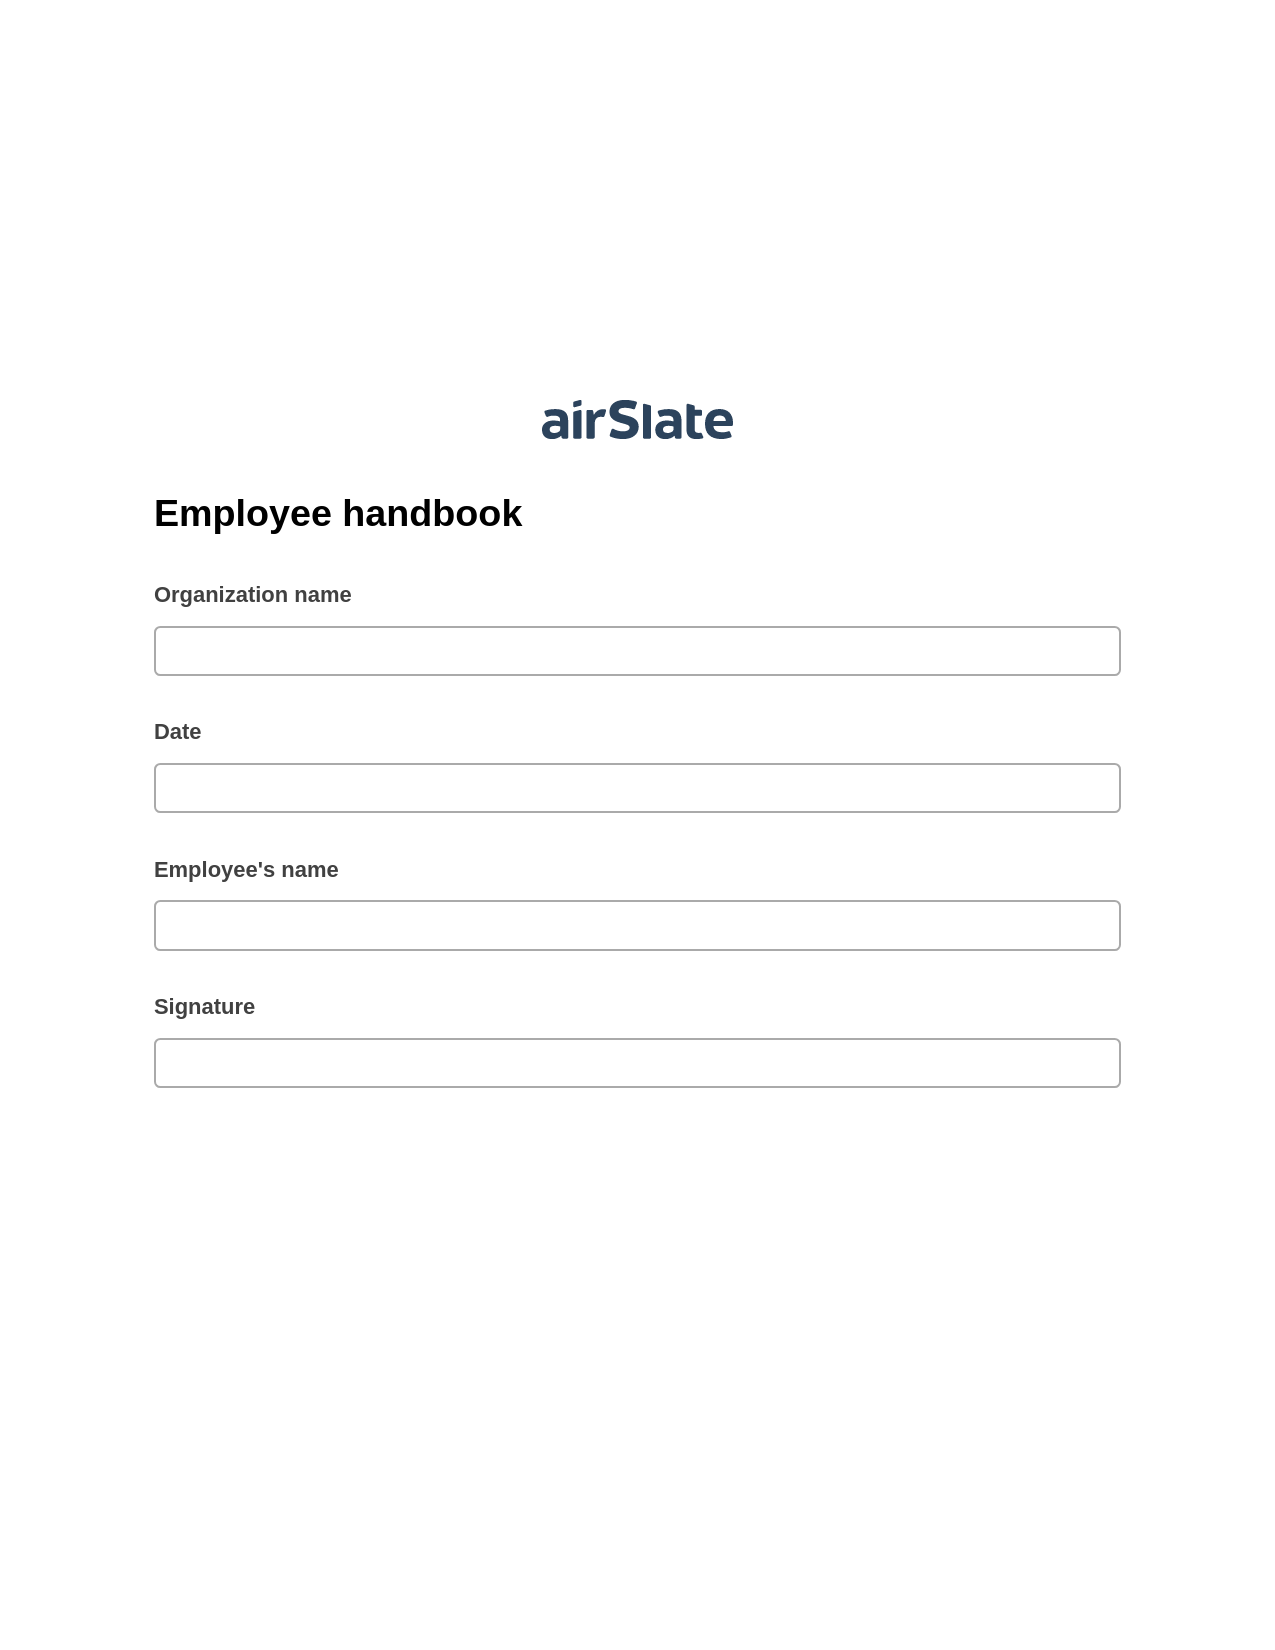 Multirole Employee handbook Pre-fill Slate from MS Dynamics 365 Records Bot, Send Mailchimp Campaign Bot, OneDrive Bot